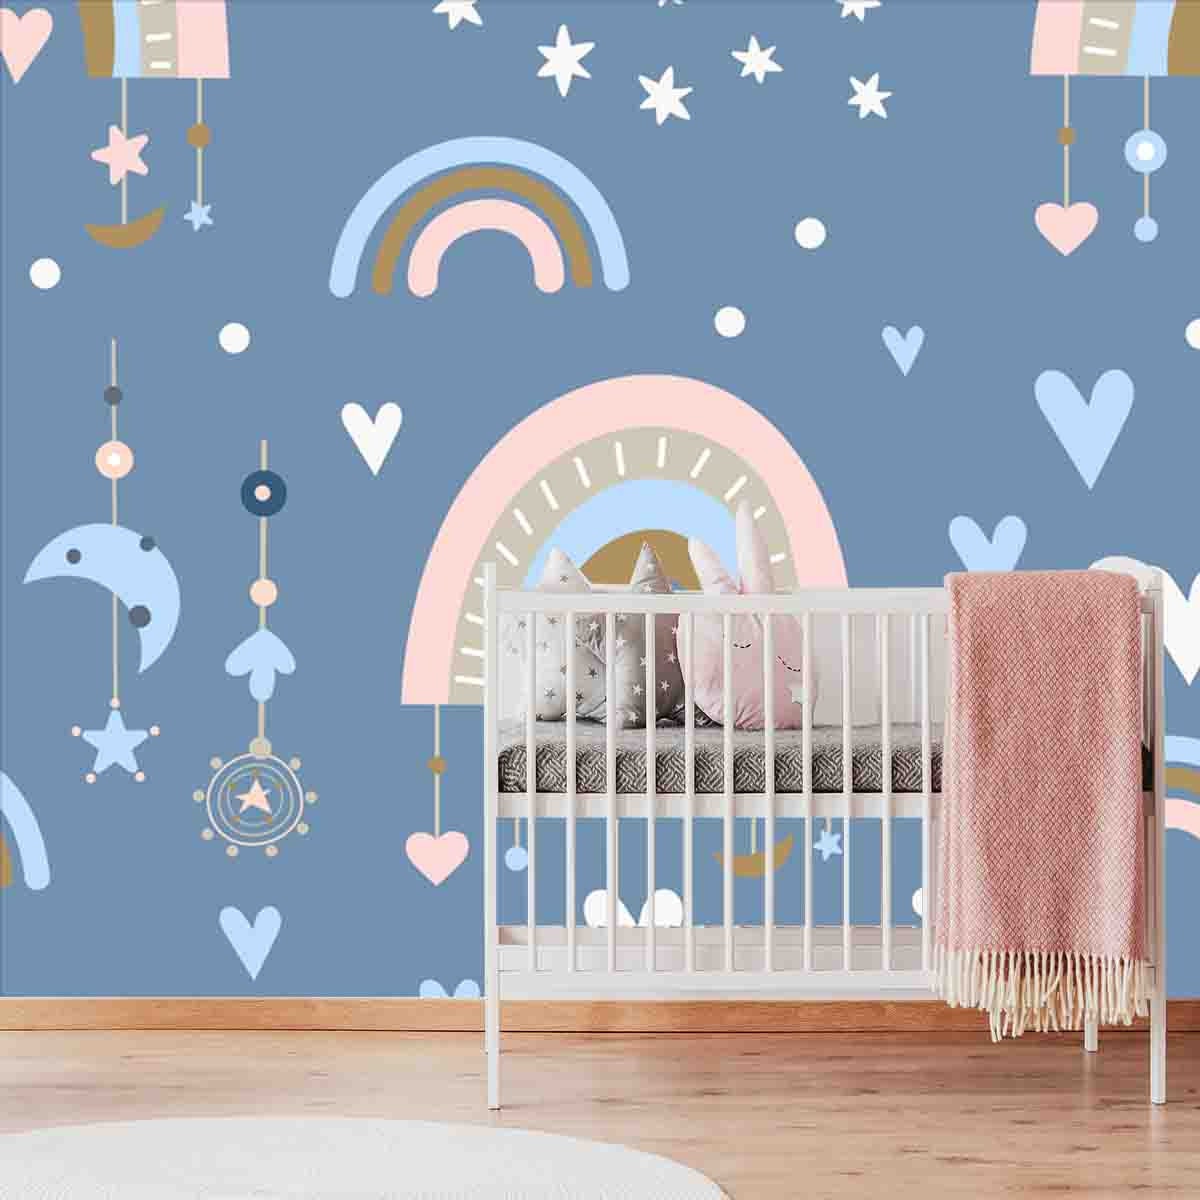 Seamless Pattern in Boho Style with Rainbows, Hearts, Stars. Kids Illustration for Nursery Design Wallpaper Girl Nursery Mural